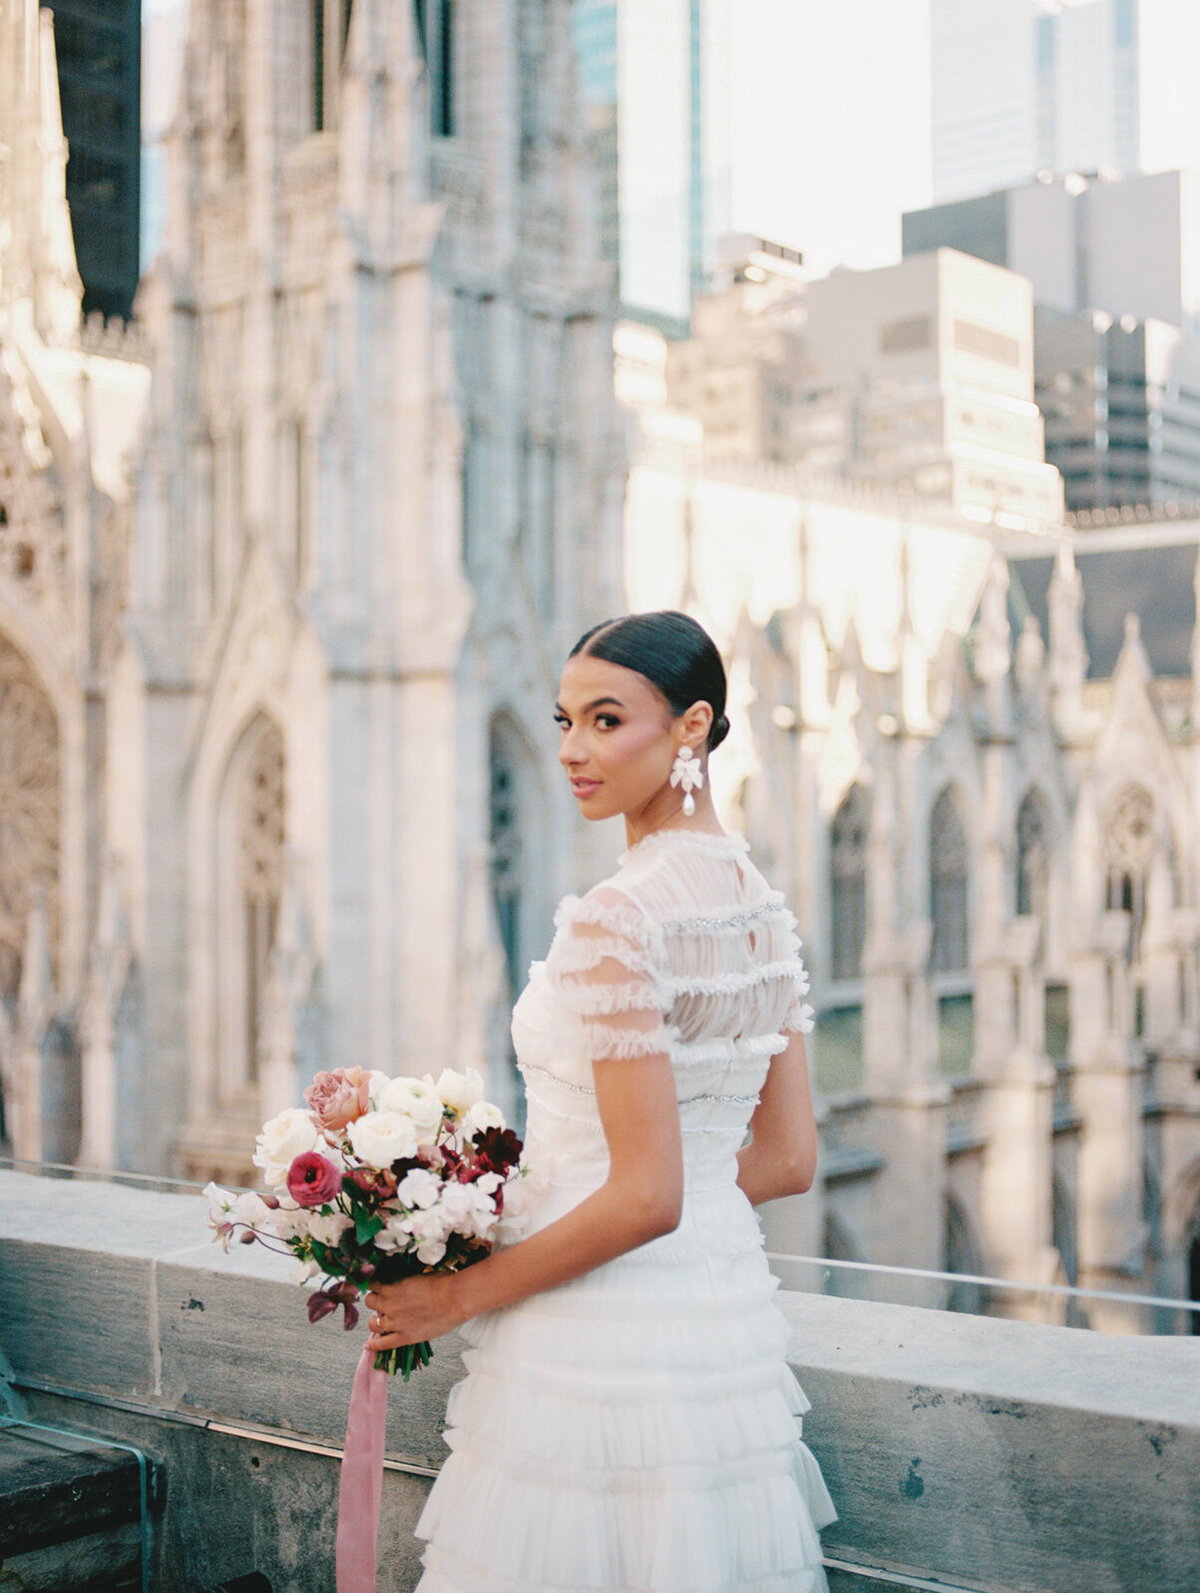 620 Loft & Garden Private Penthouse Wedding - New York City - Stephanie Michelle Photography - Britt Jones Co-106